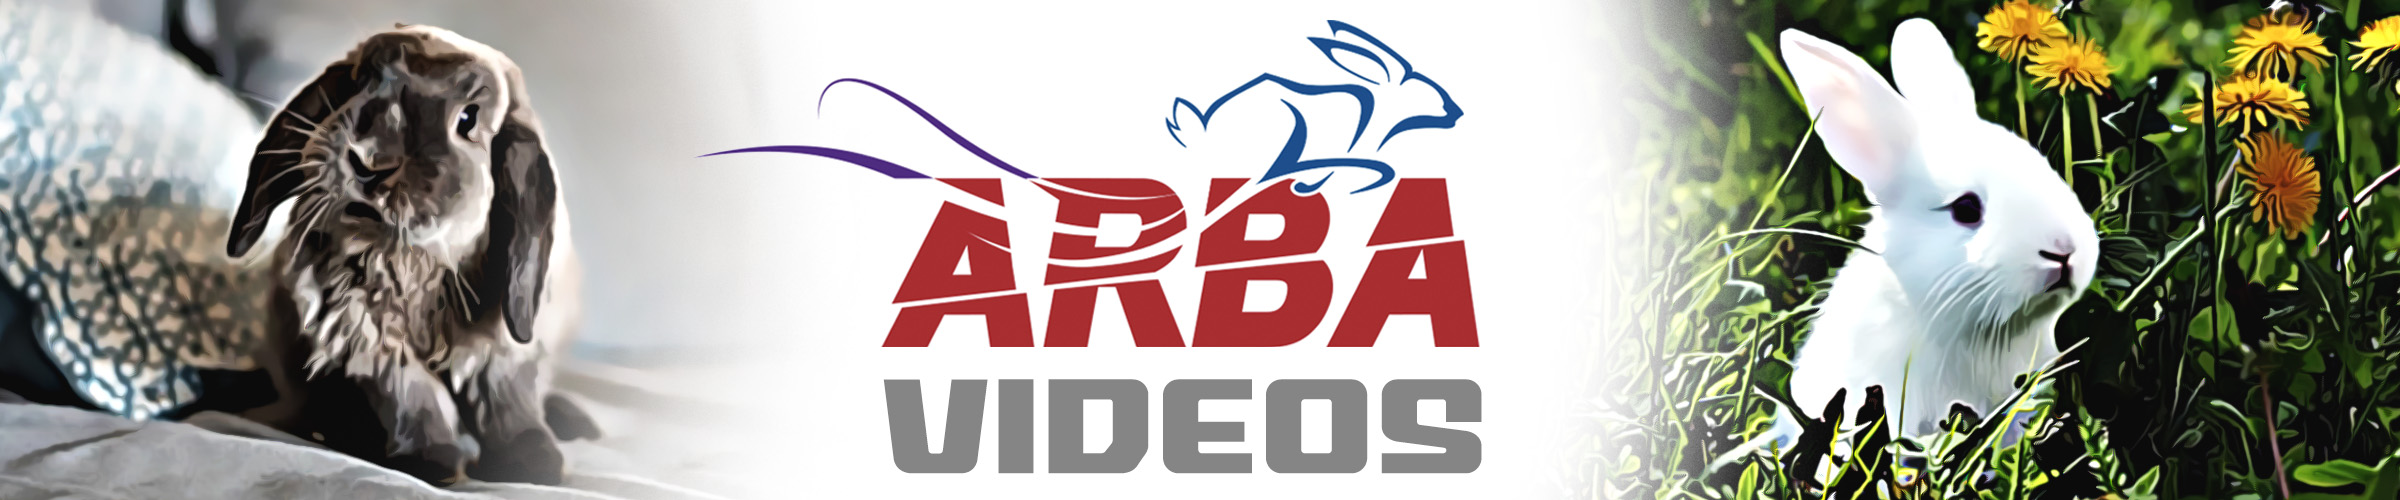 ARBA Videos